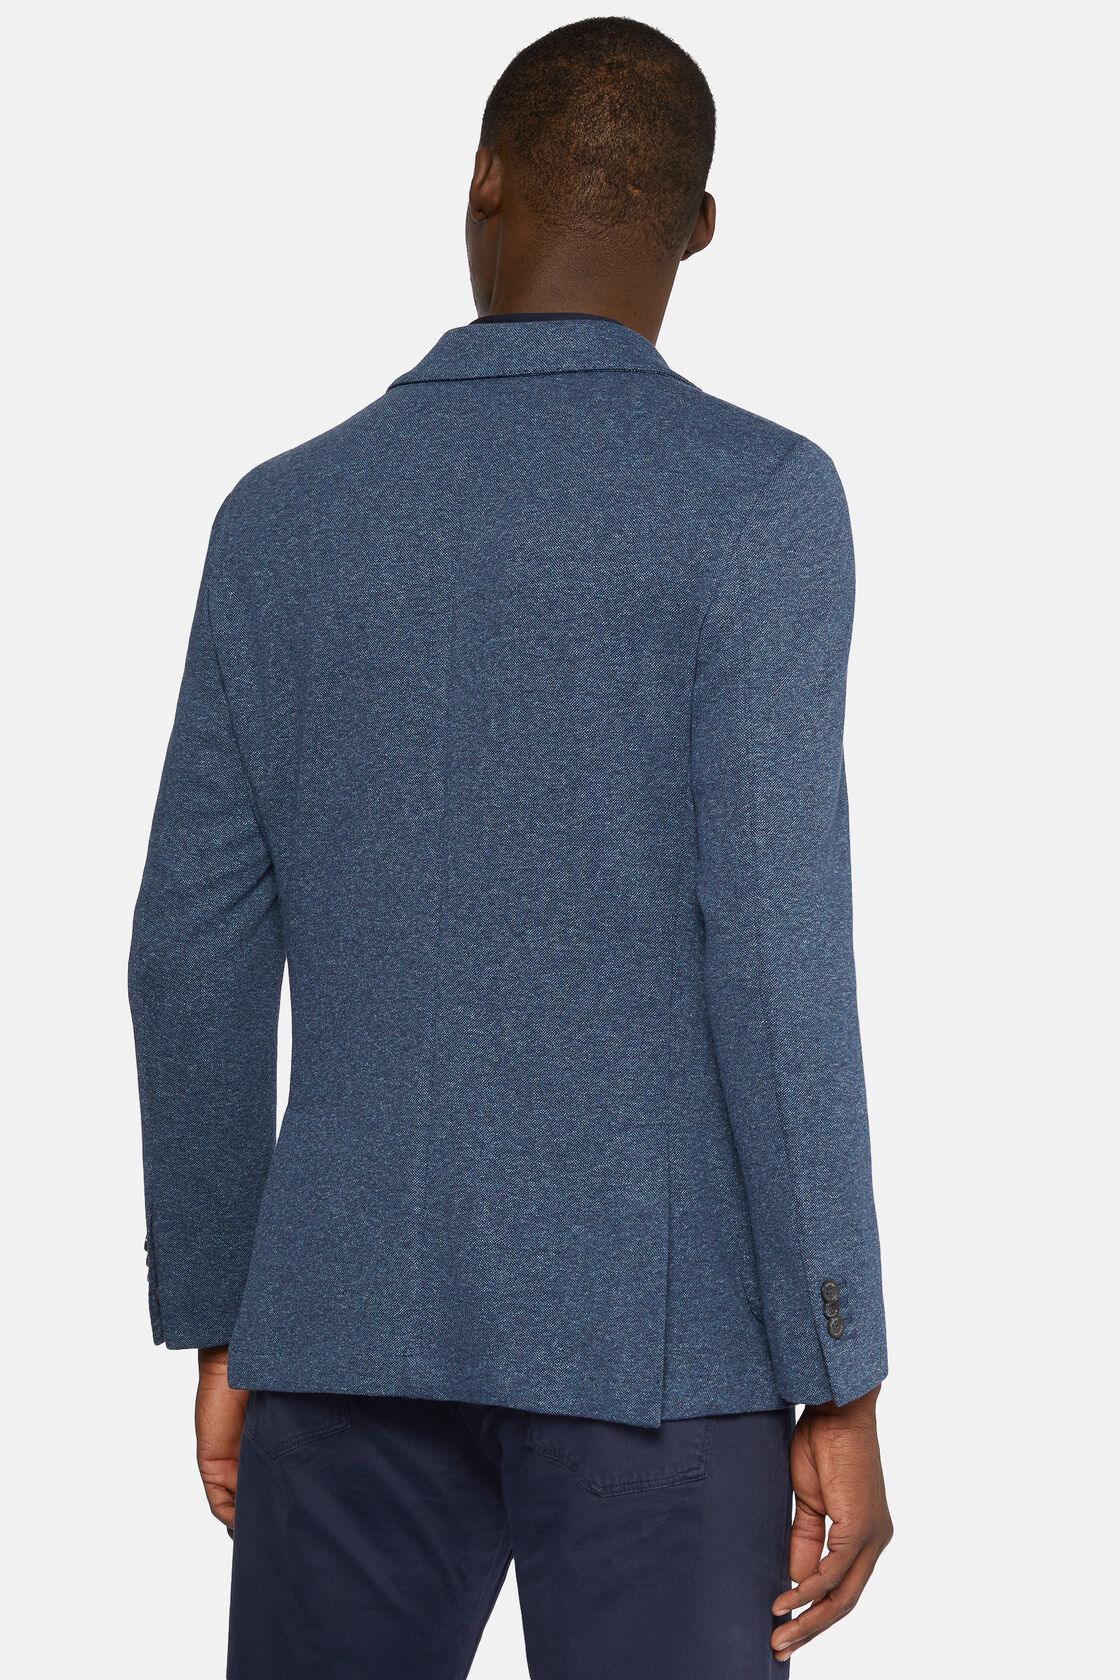 Blue Jacket In Cotton Jersey, Blue, hi-res